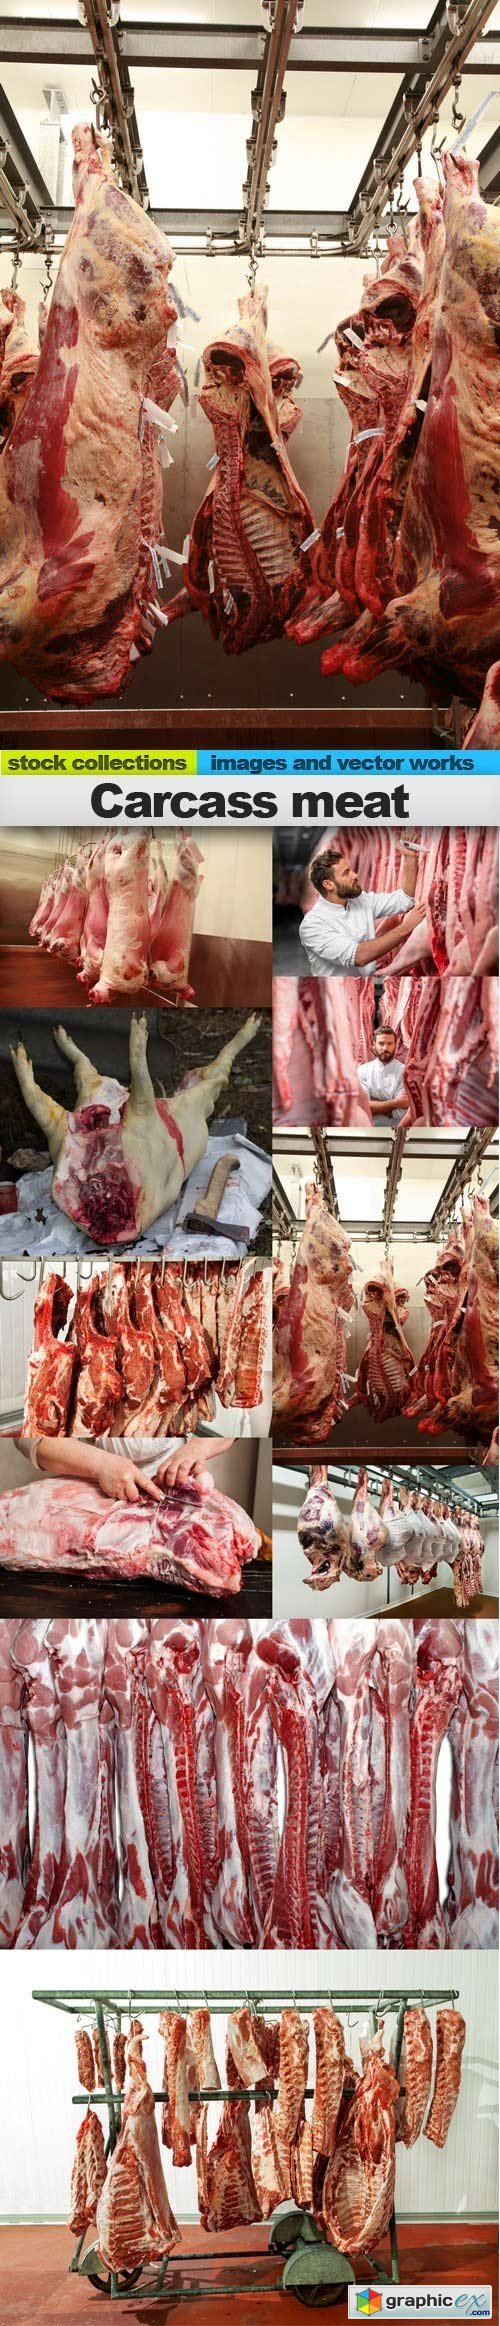 Carcass meat, 15 x UHQ JPEG